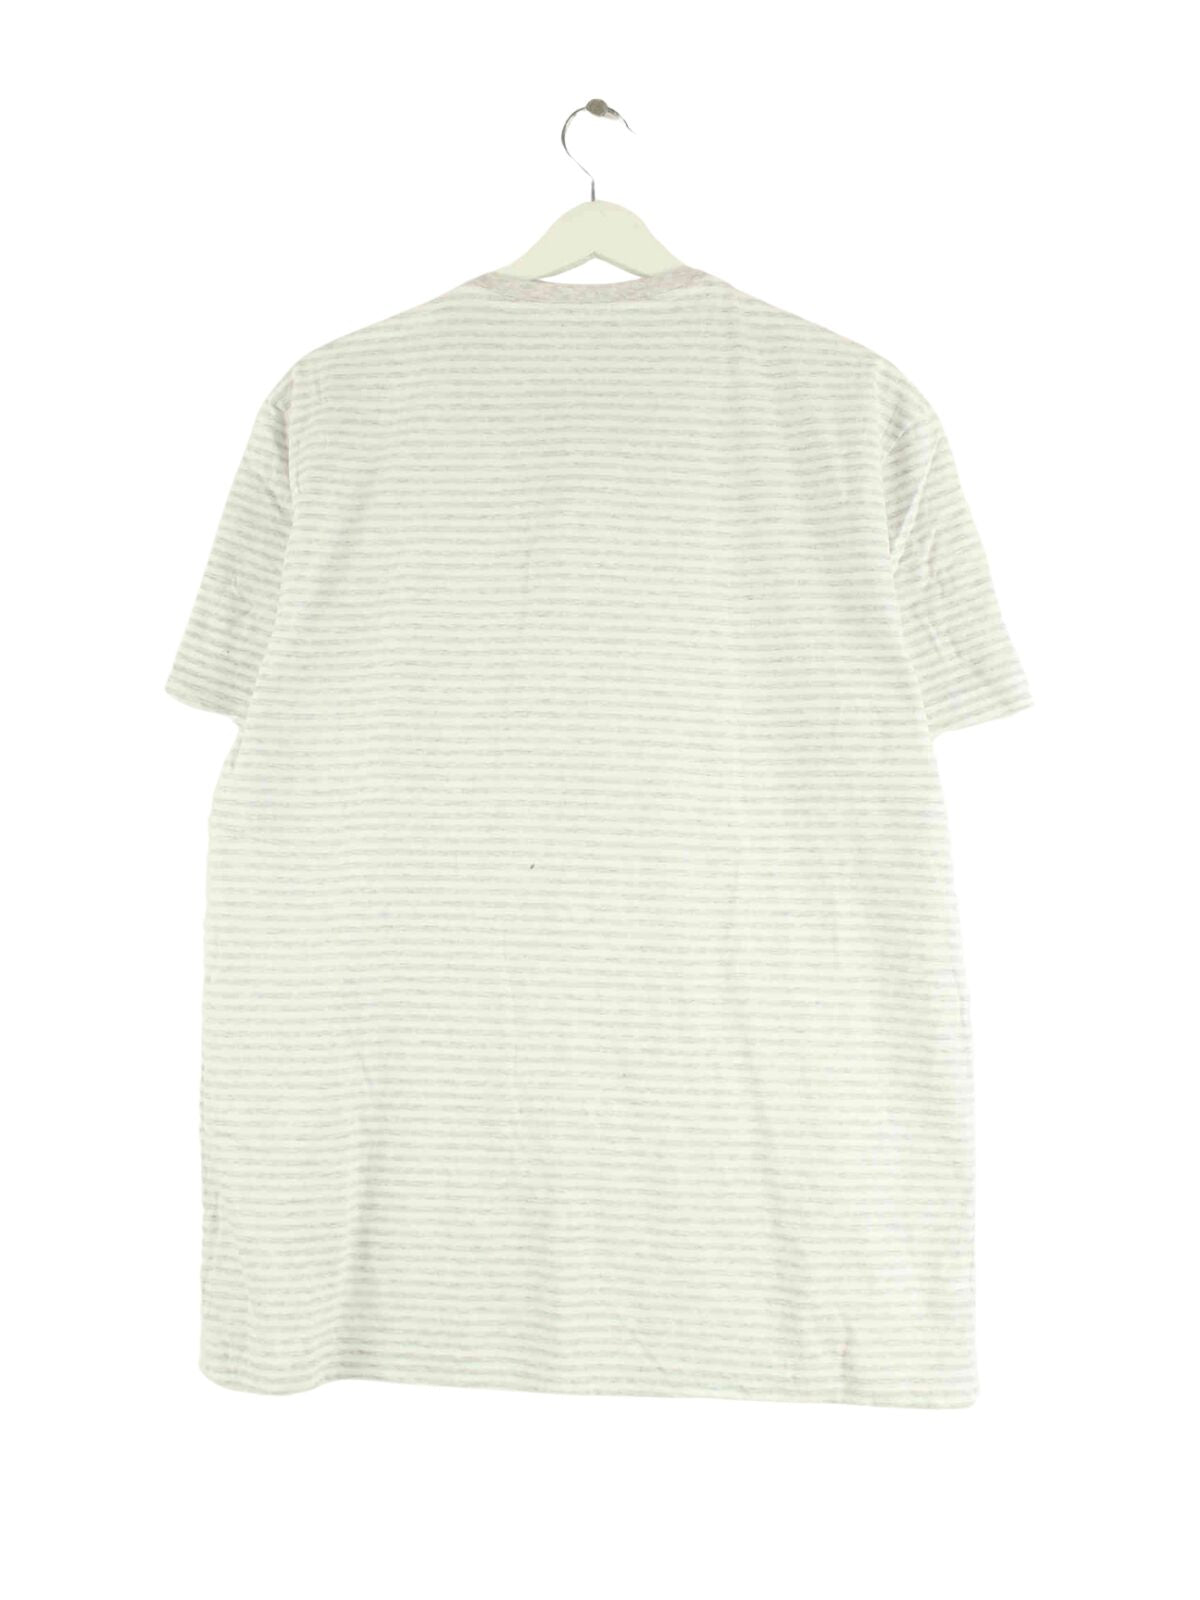 Lacoste Striped T-Shirt Grau L (back image)